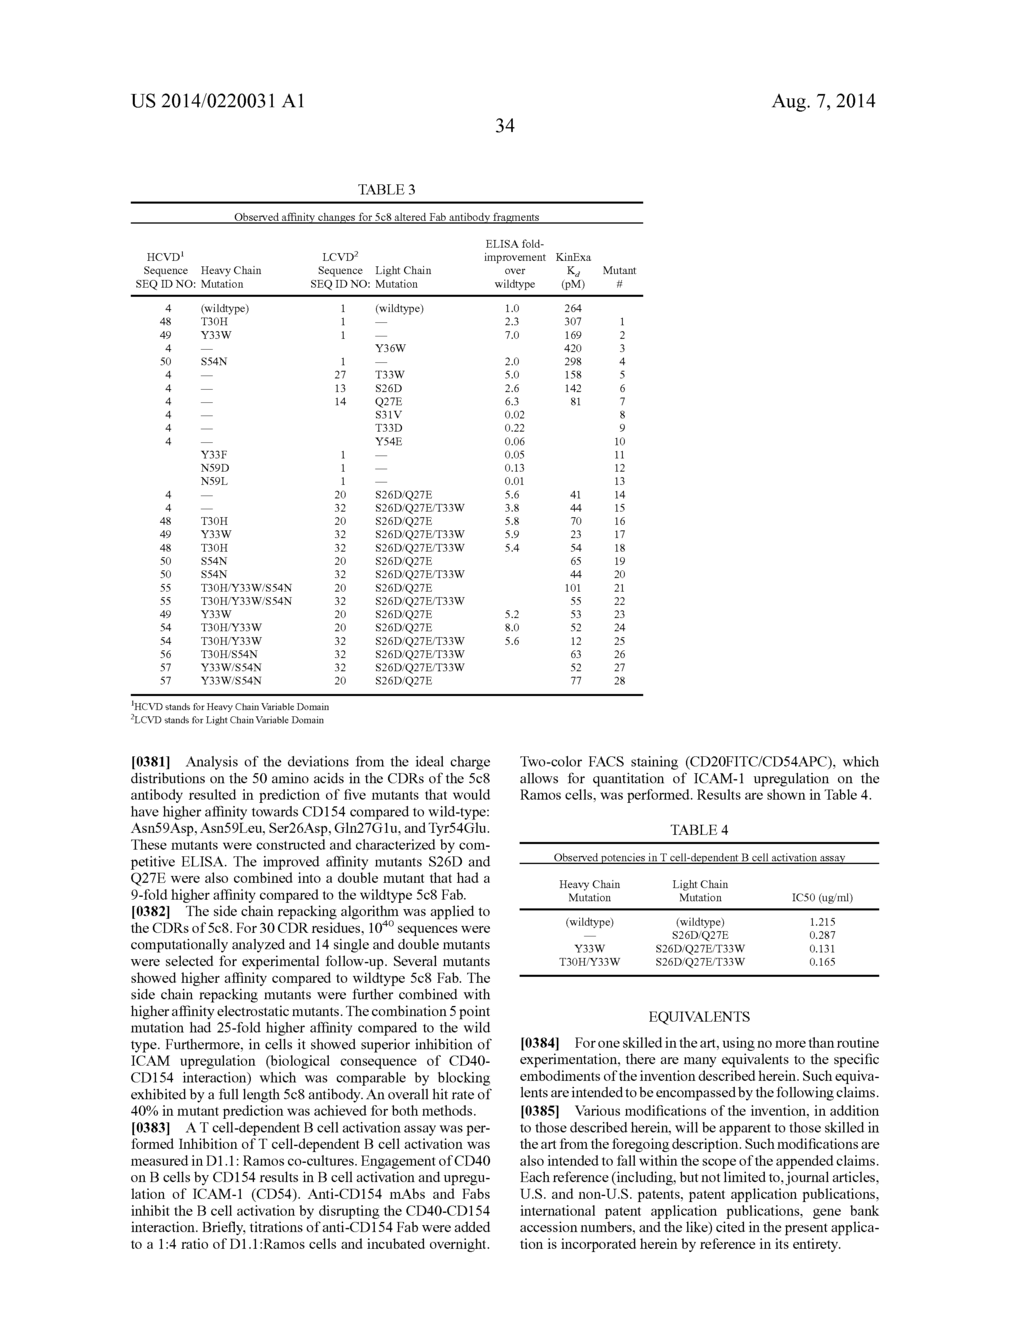 ANTI-CD154 ANTIBODIES - diagram, schematic, and image 35